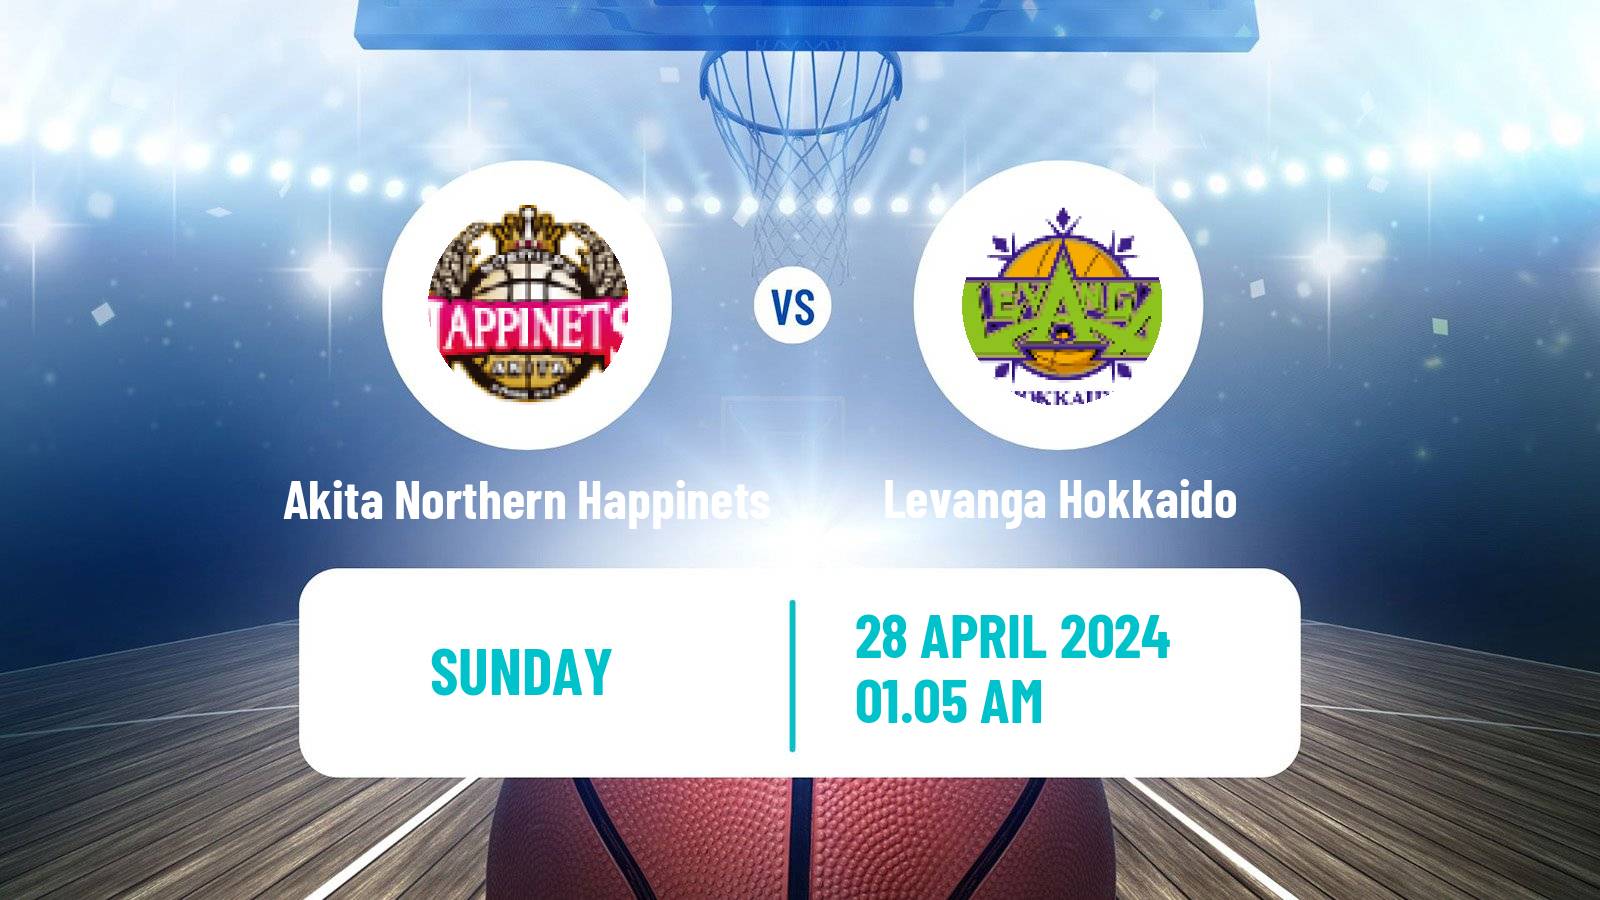 Basketball BJ League Akita Northern Happinets - Levanga Hokkaido